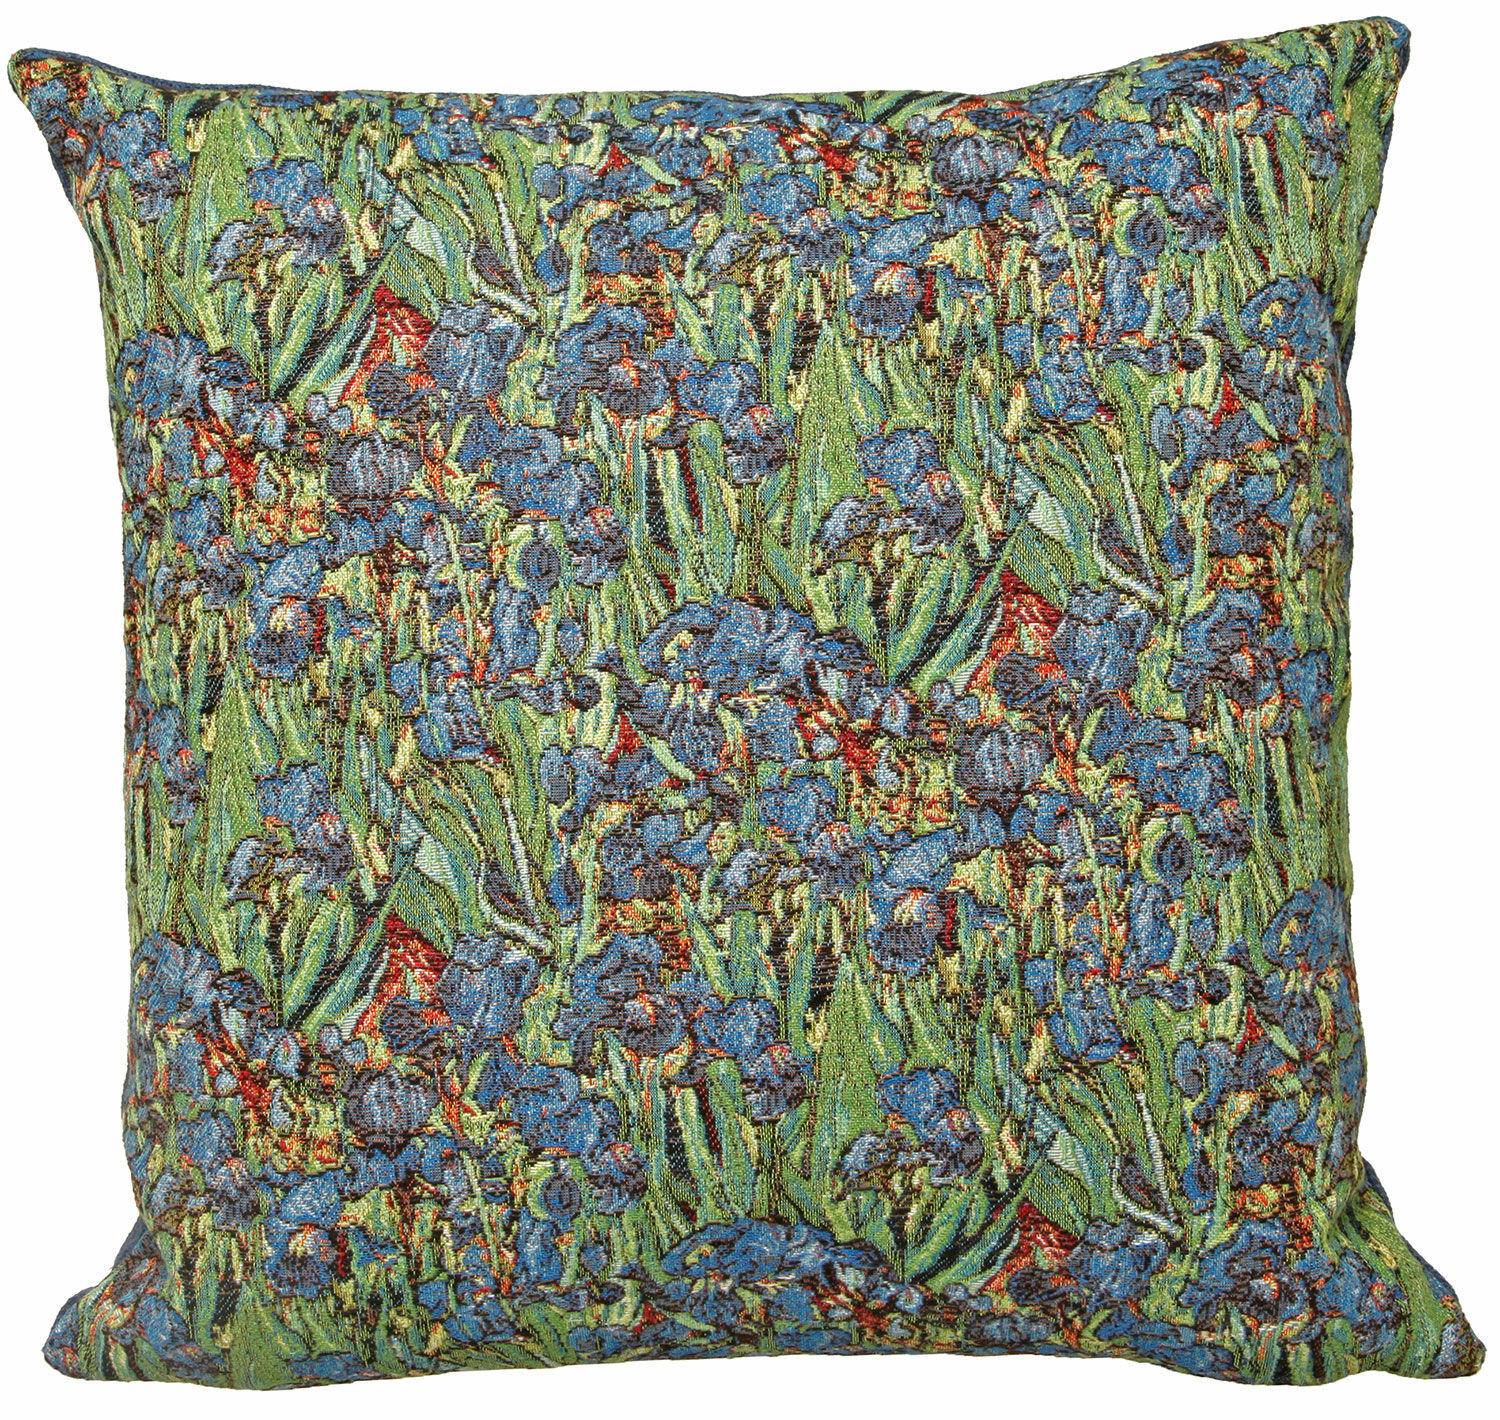 Cushion cover "Irises" by Vincent van Gogh